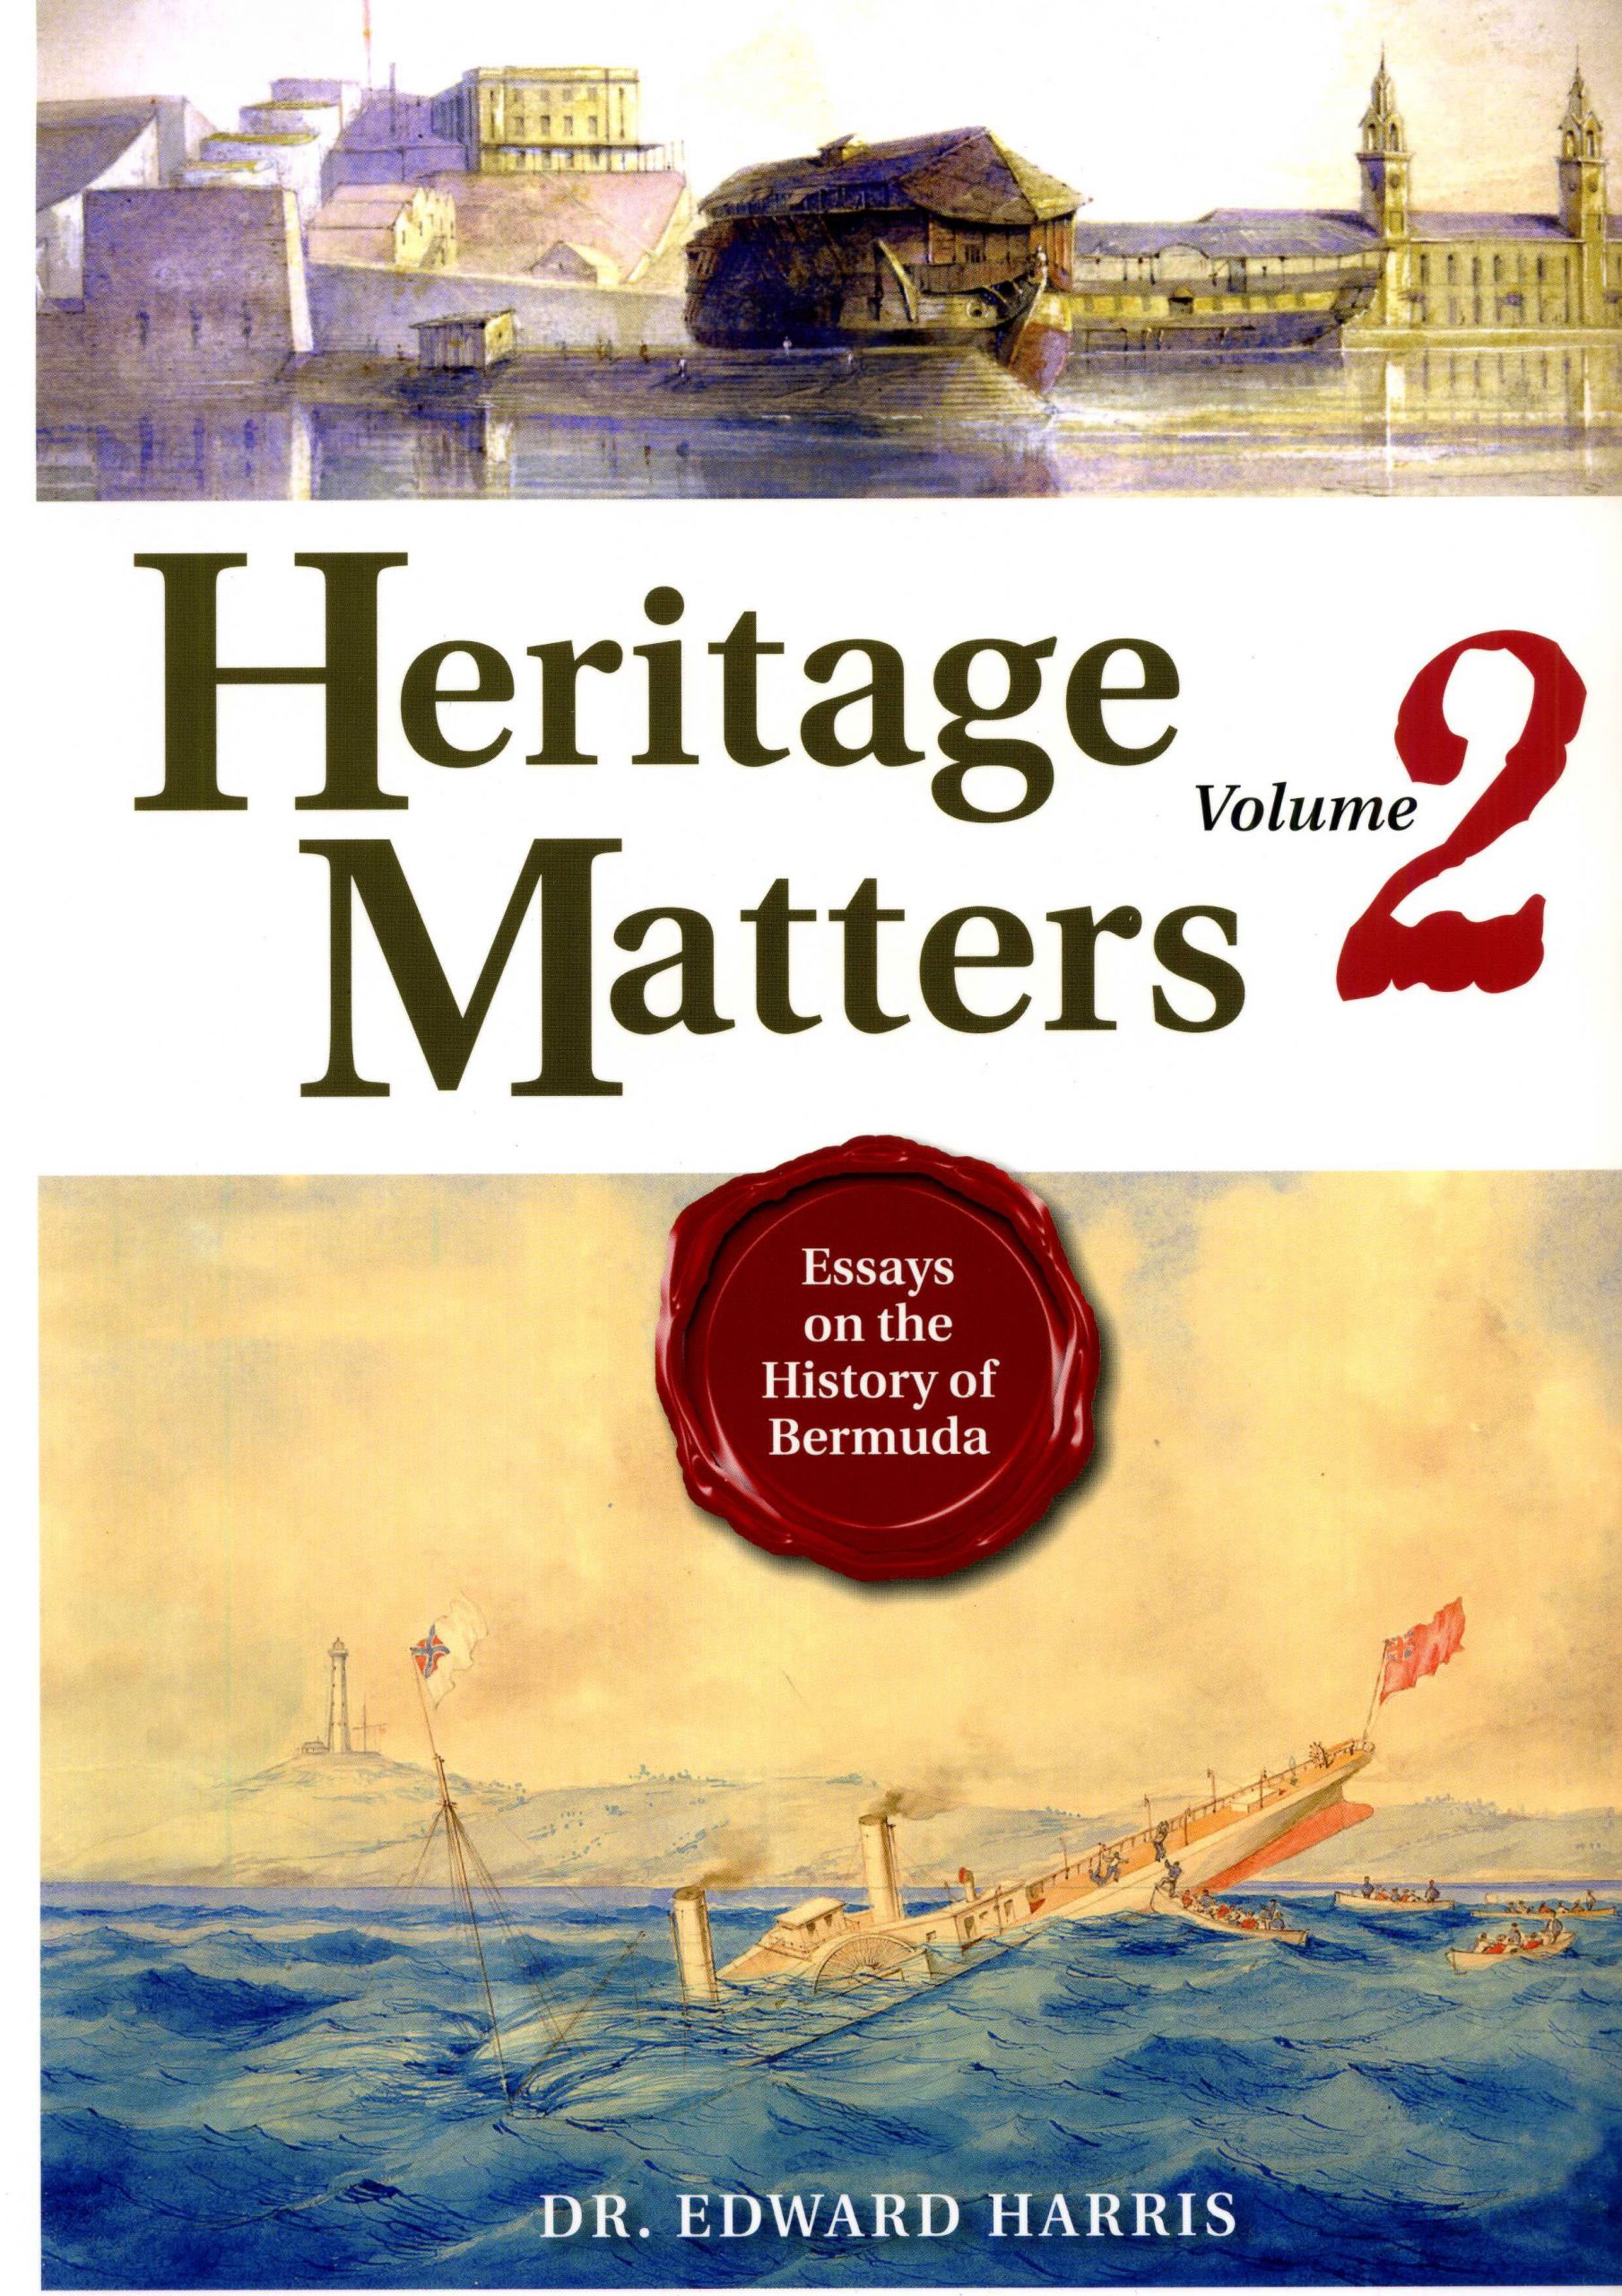 Heritage Matters Volume 2